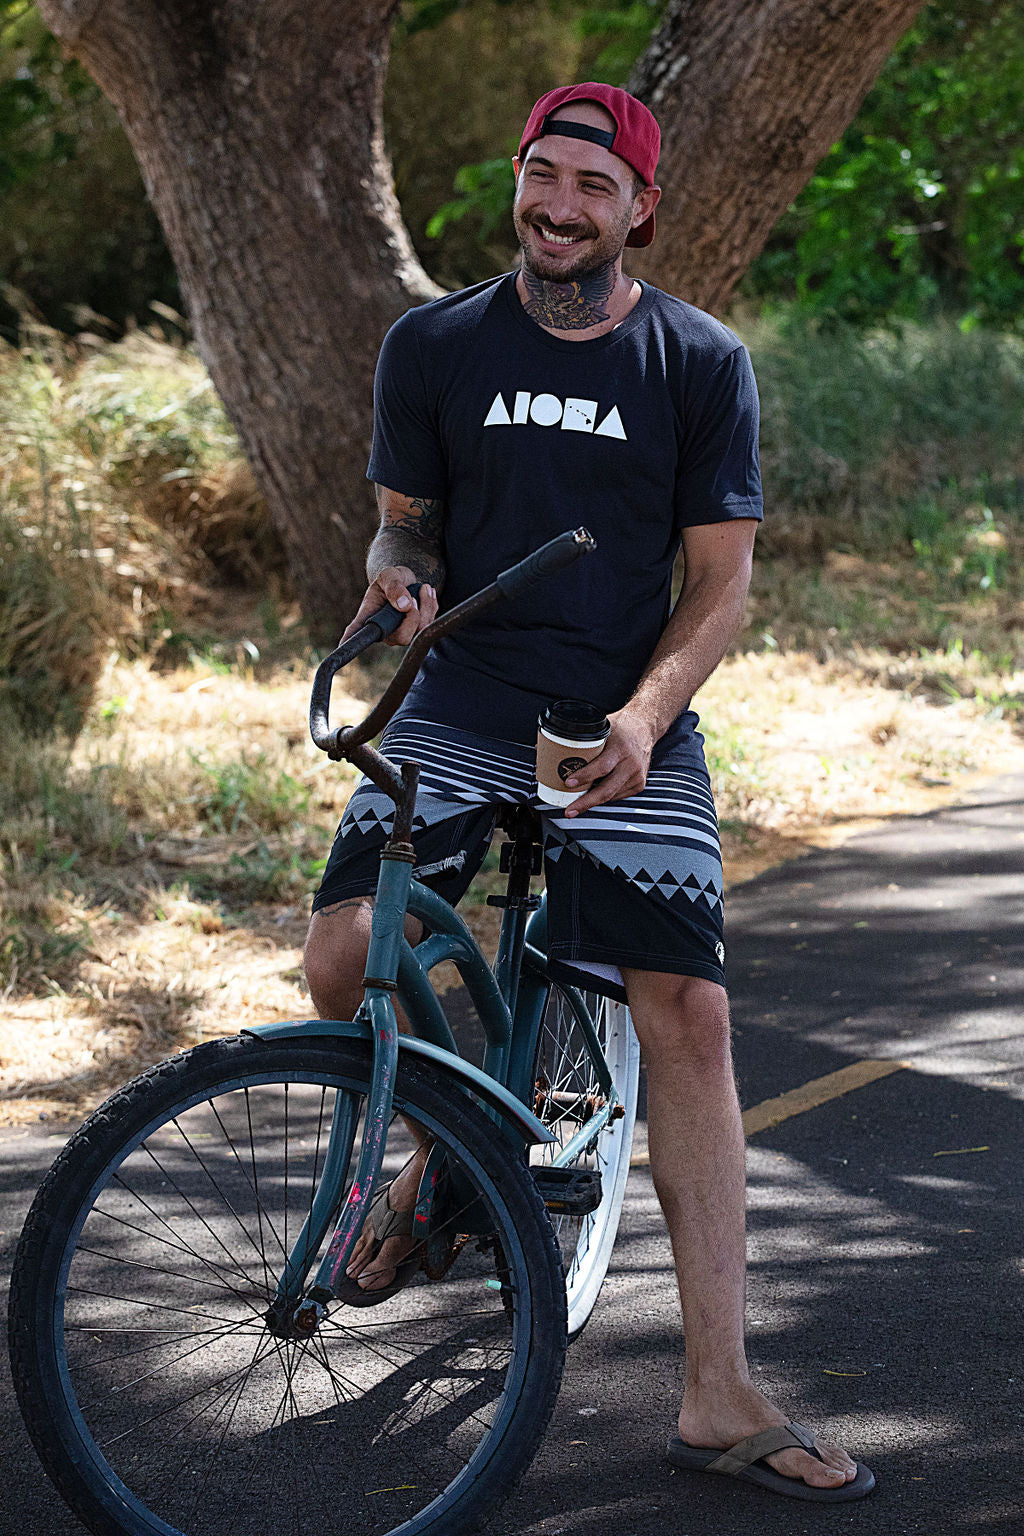 Person smiling riding a beach cruiser bike wearing an Aloha Island Shapes logo t-shirt